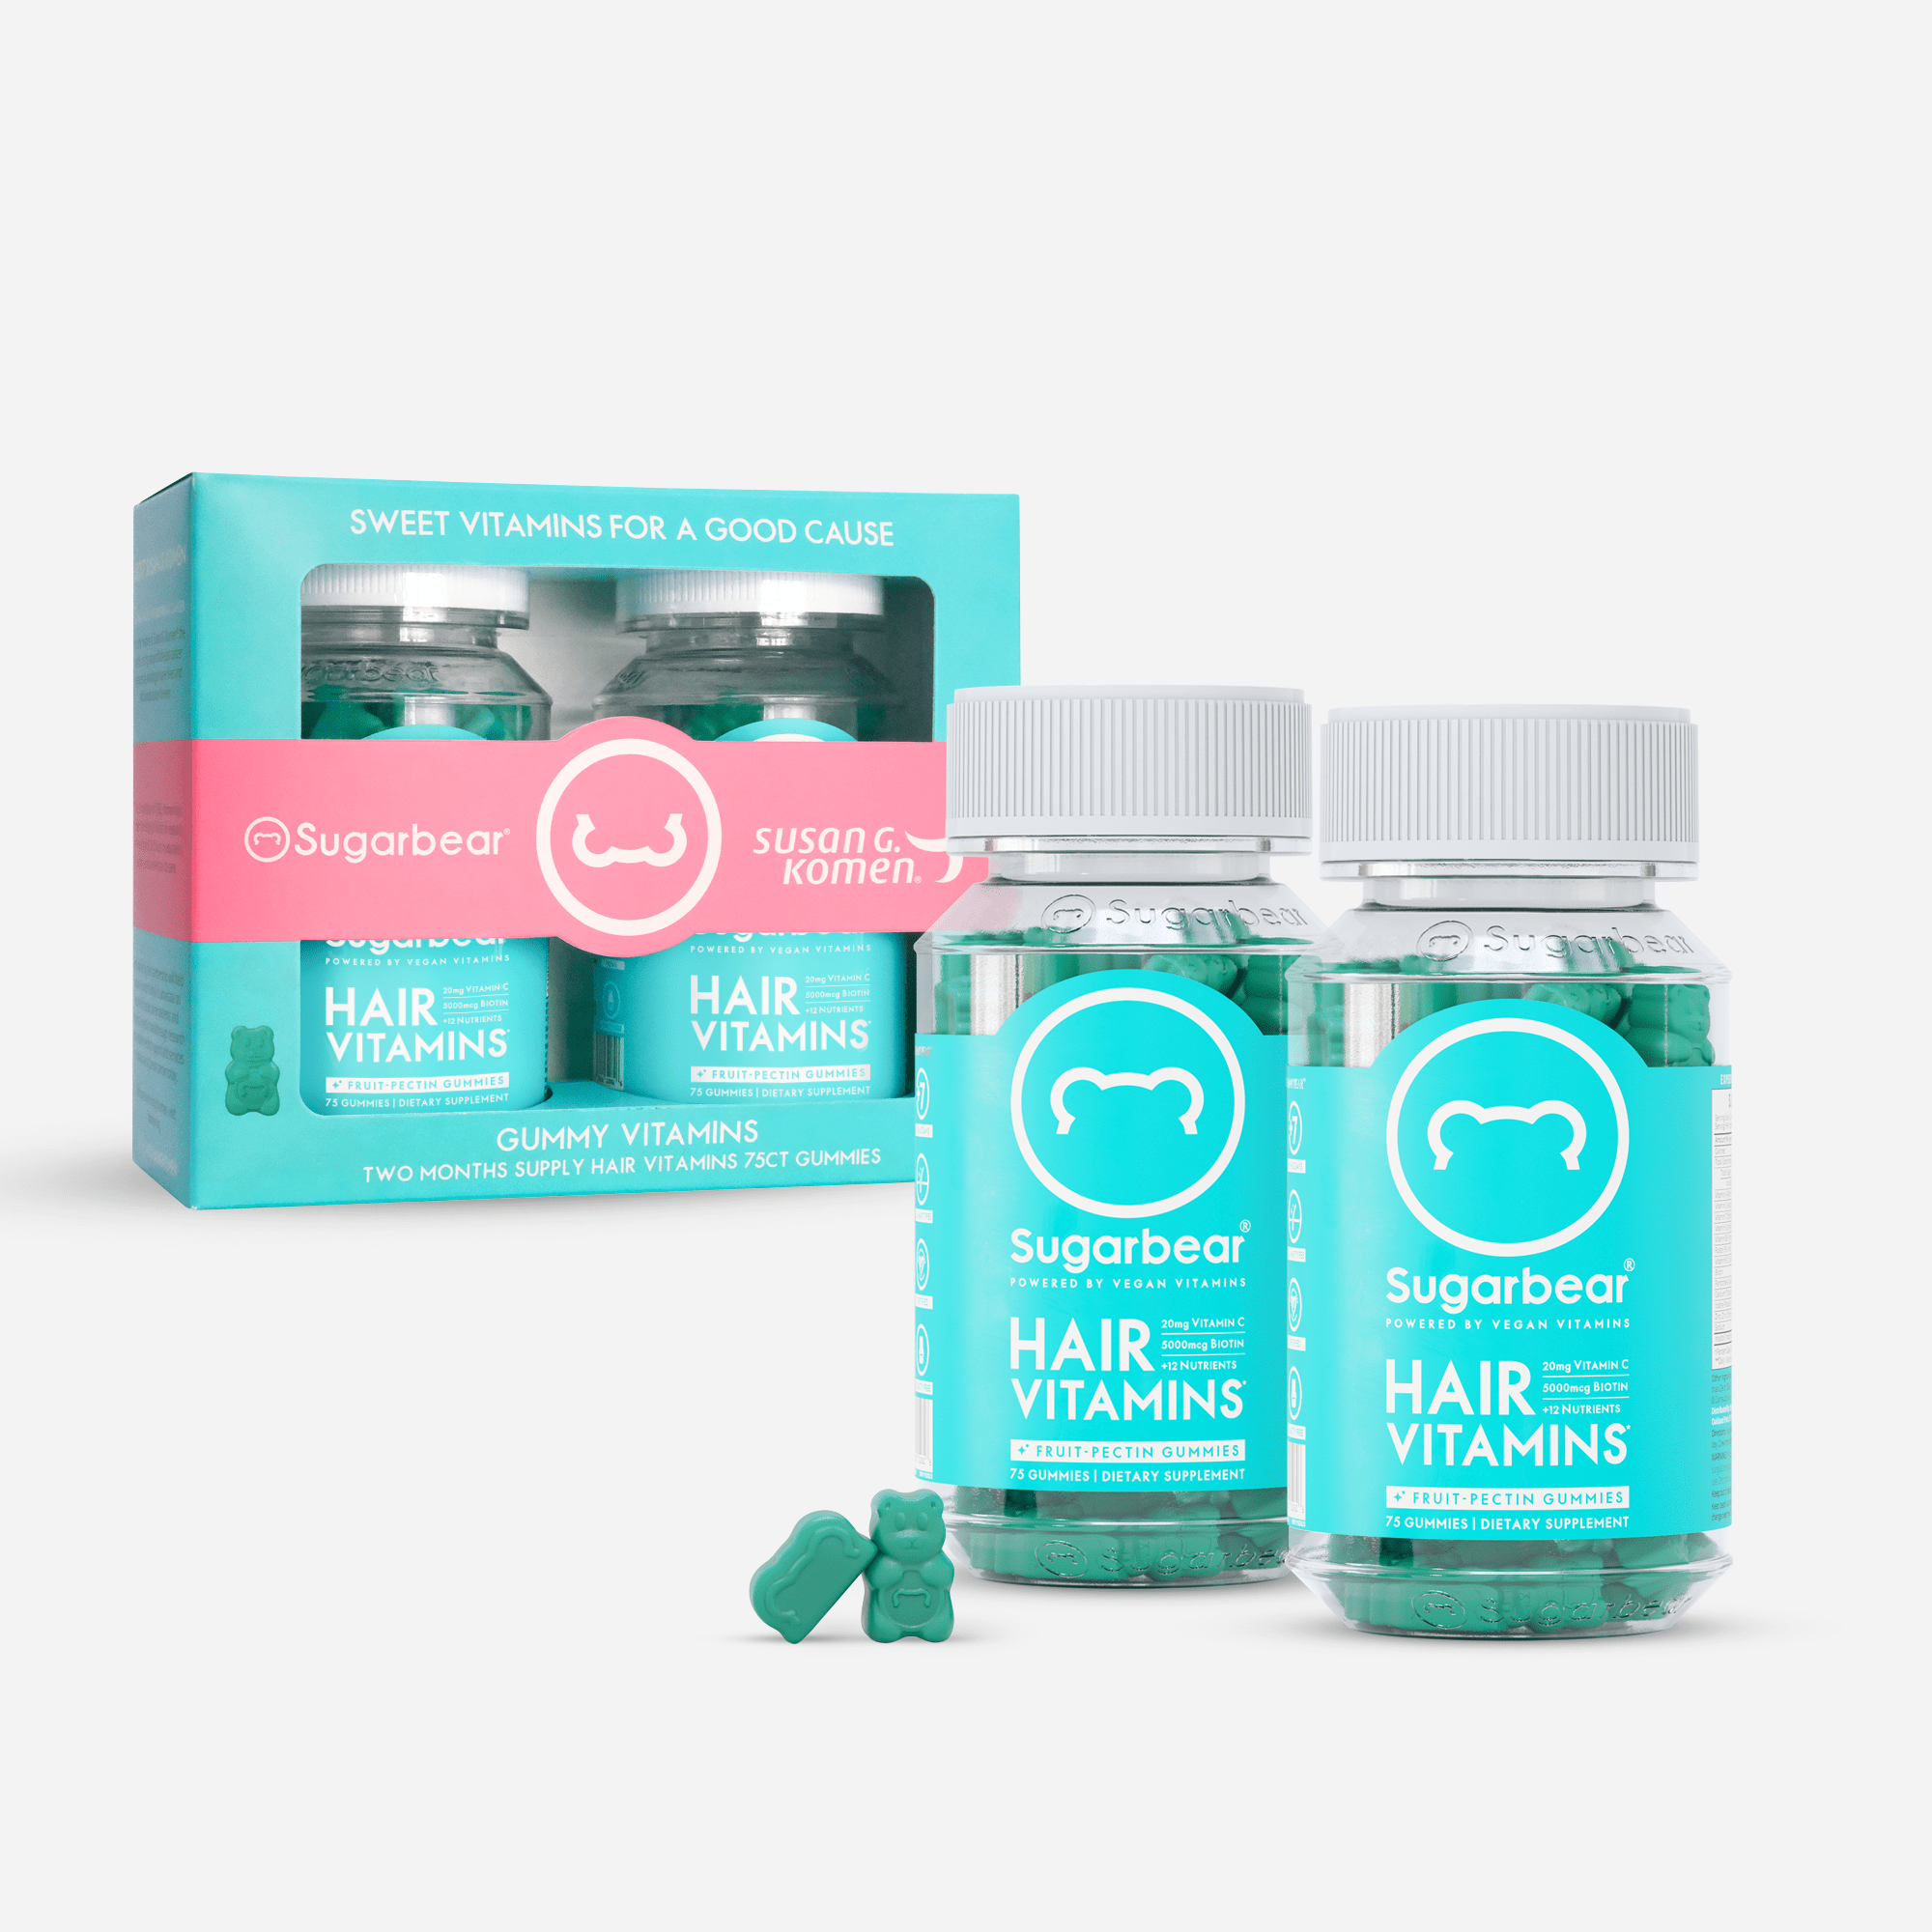 Kit Sweet Vitamins for a Good Cause - Sugarbear Hair Vitamins Pack de 2 meses + Lima de uñas de cristal